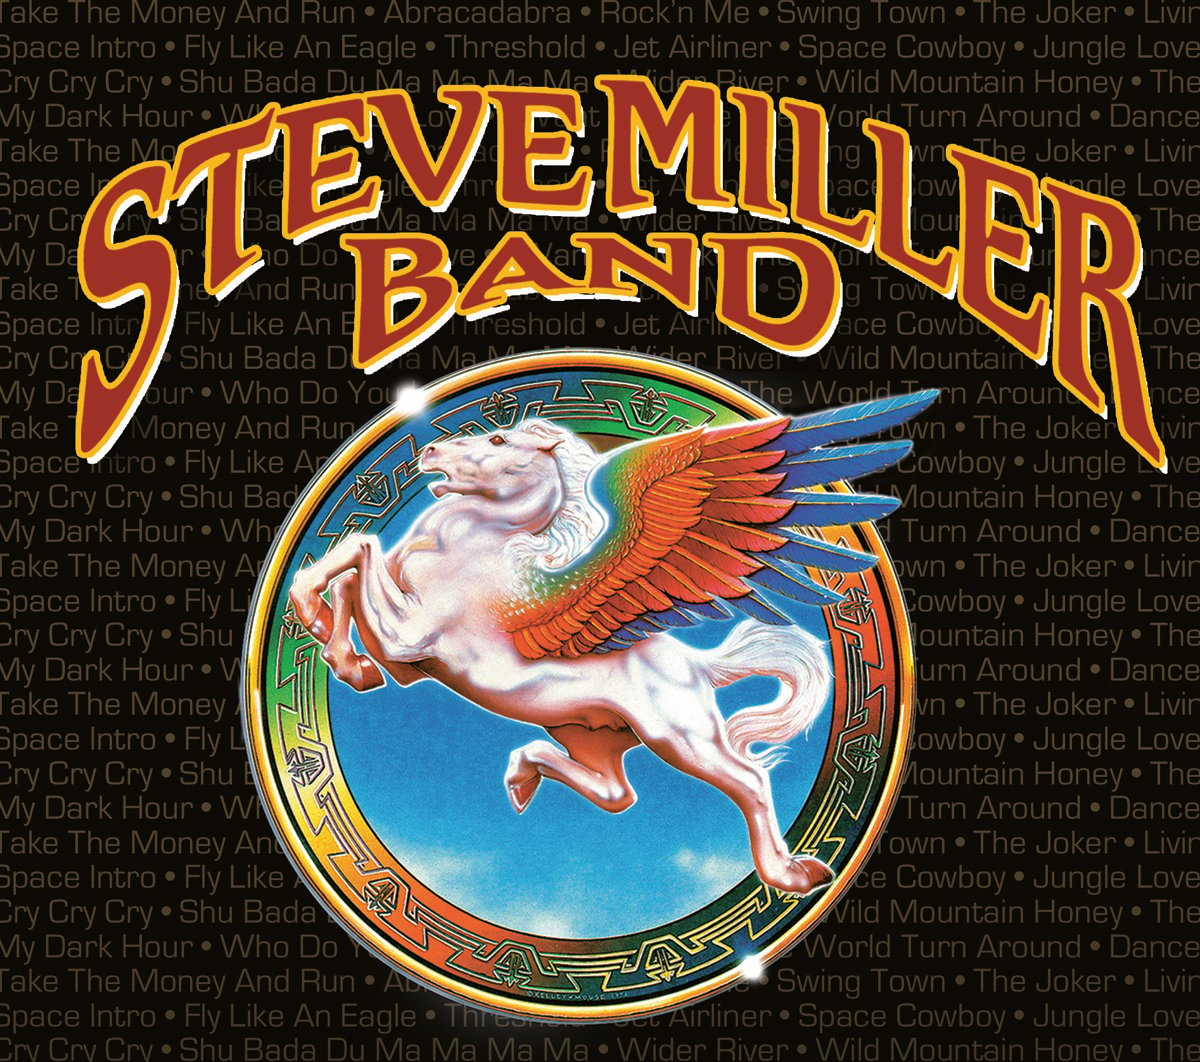 Download Latest HD Wallpaper of, Music, Steve Miller Band